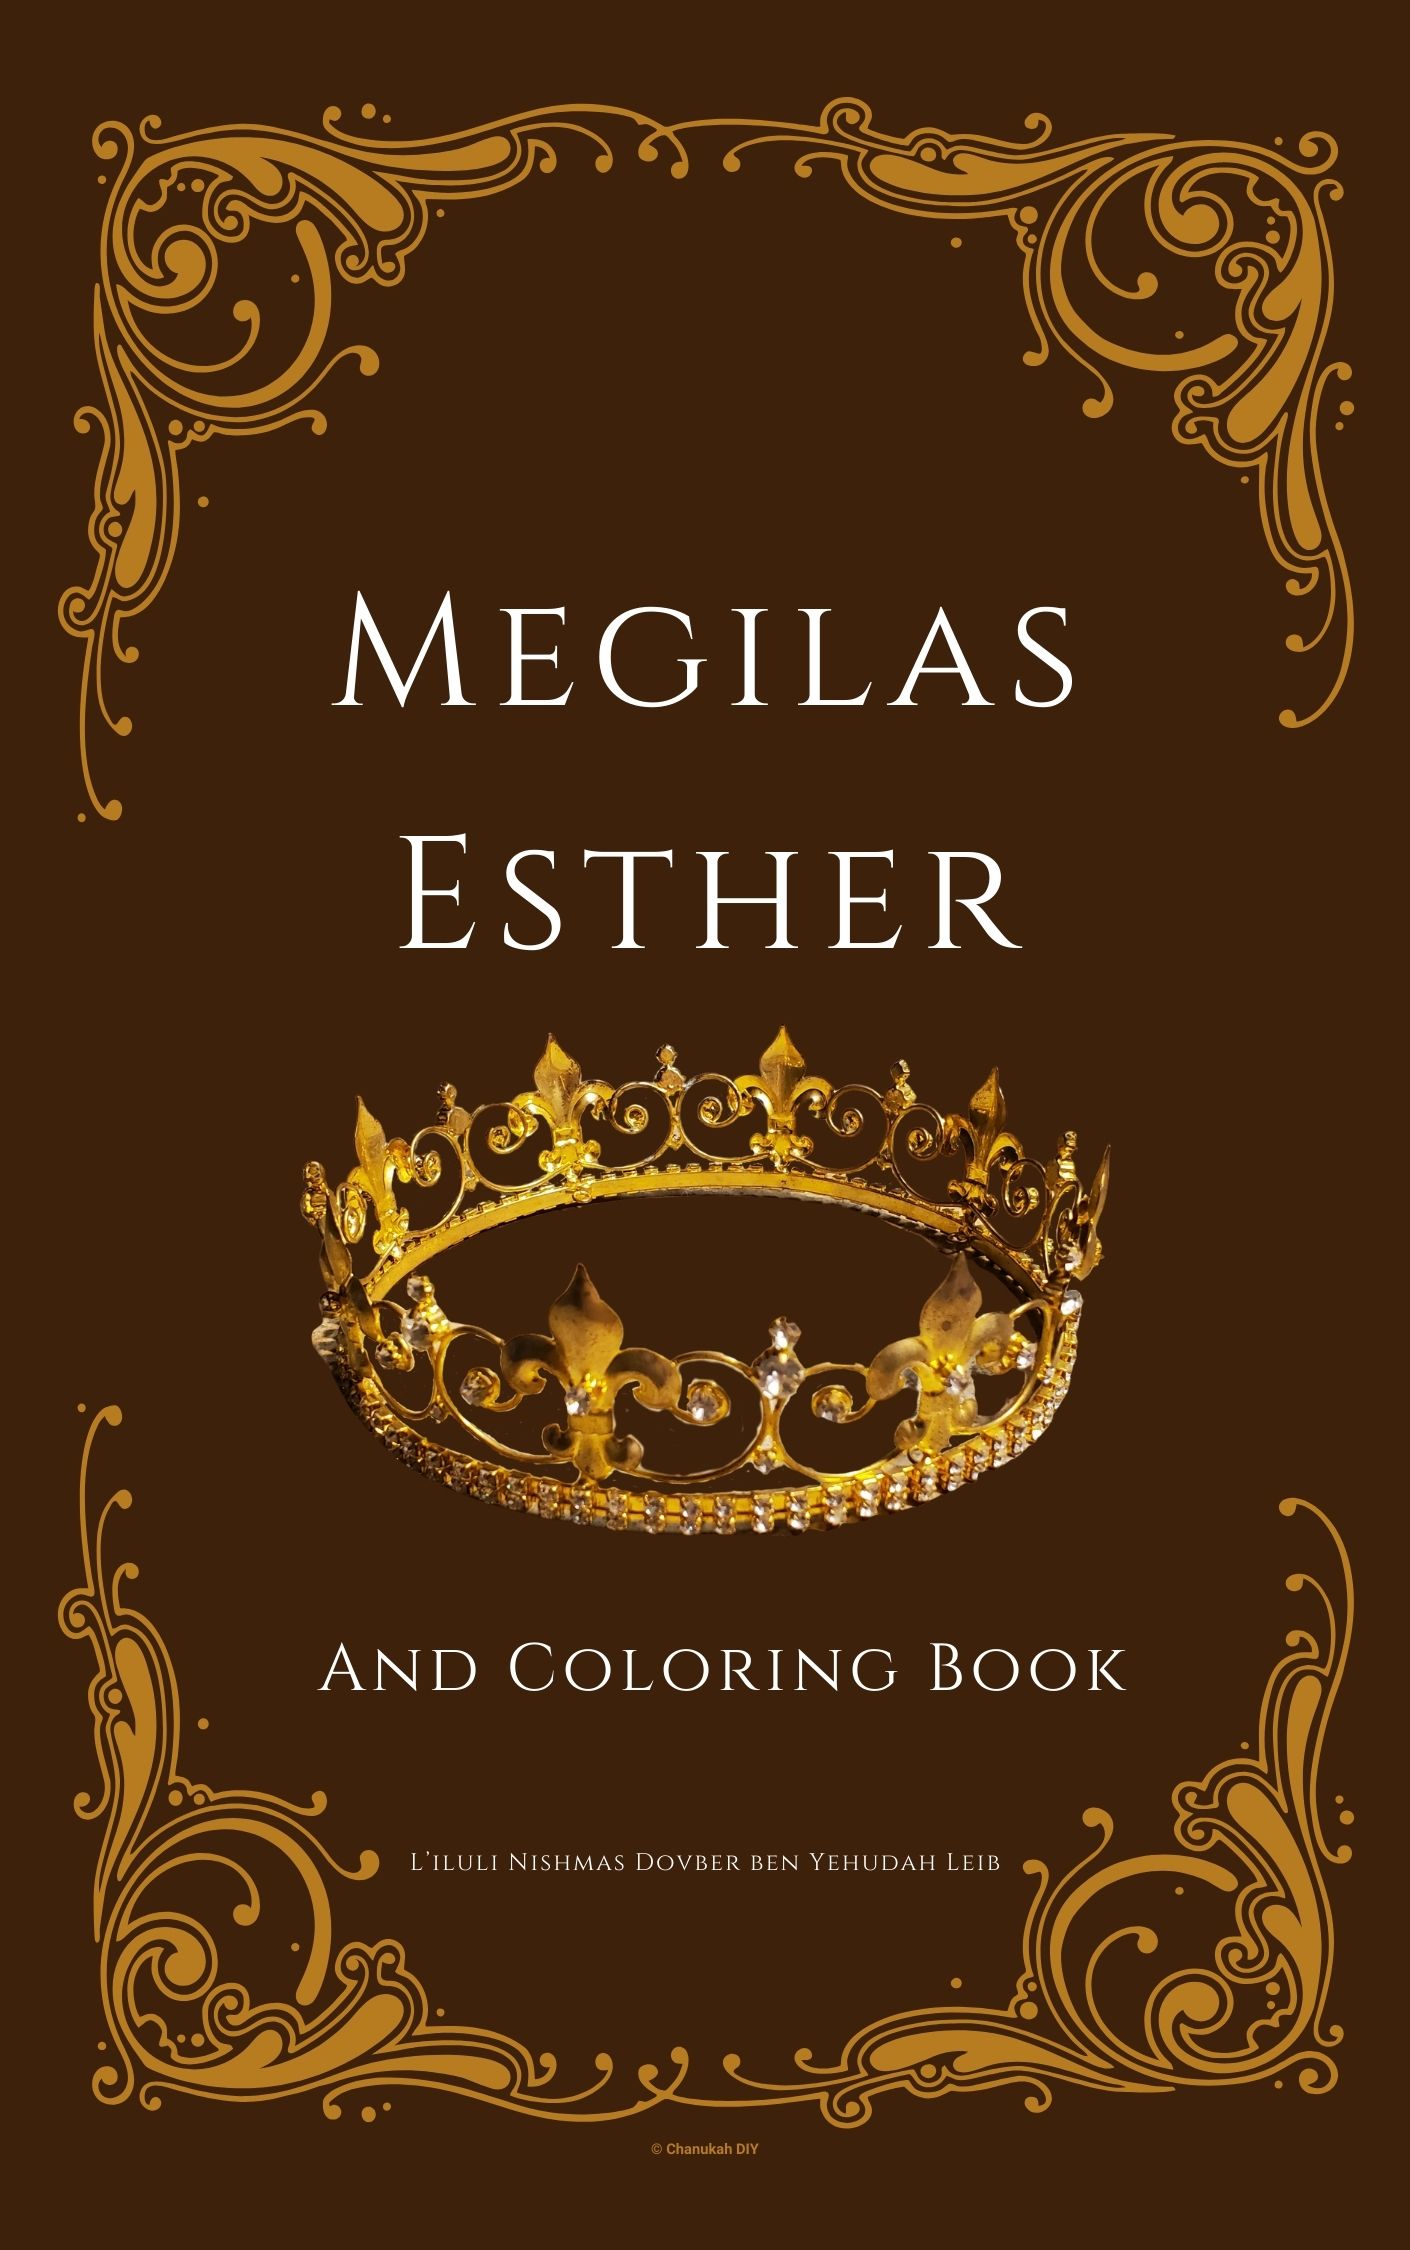 Megillas Esther and Coloring Book